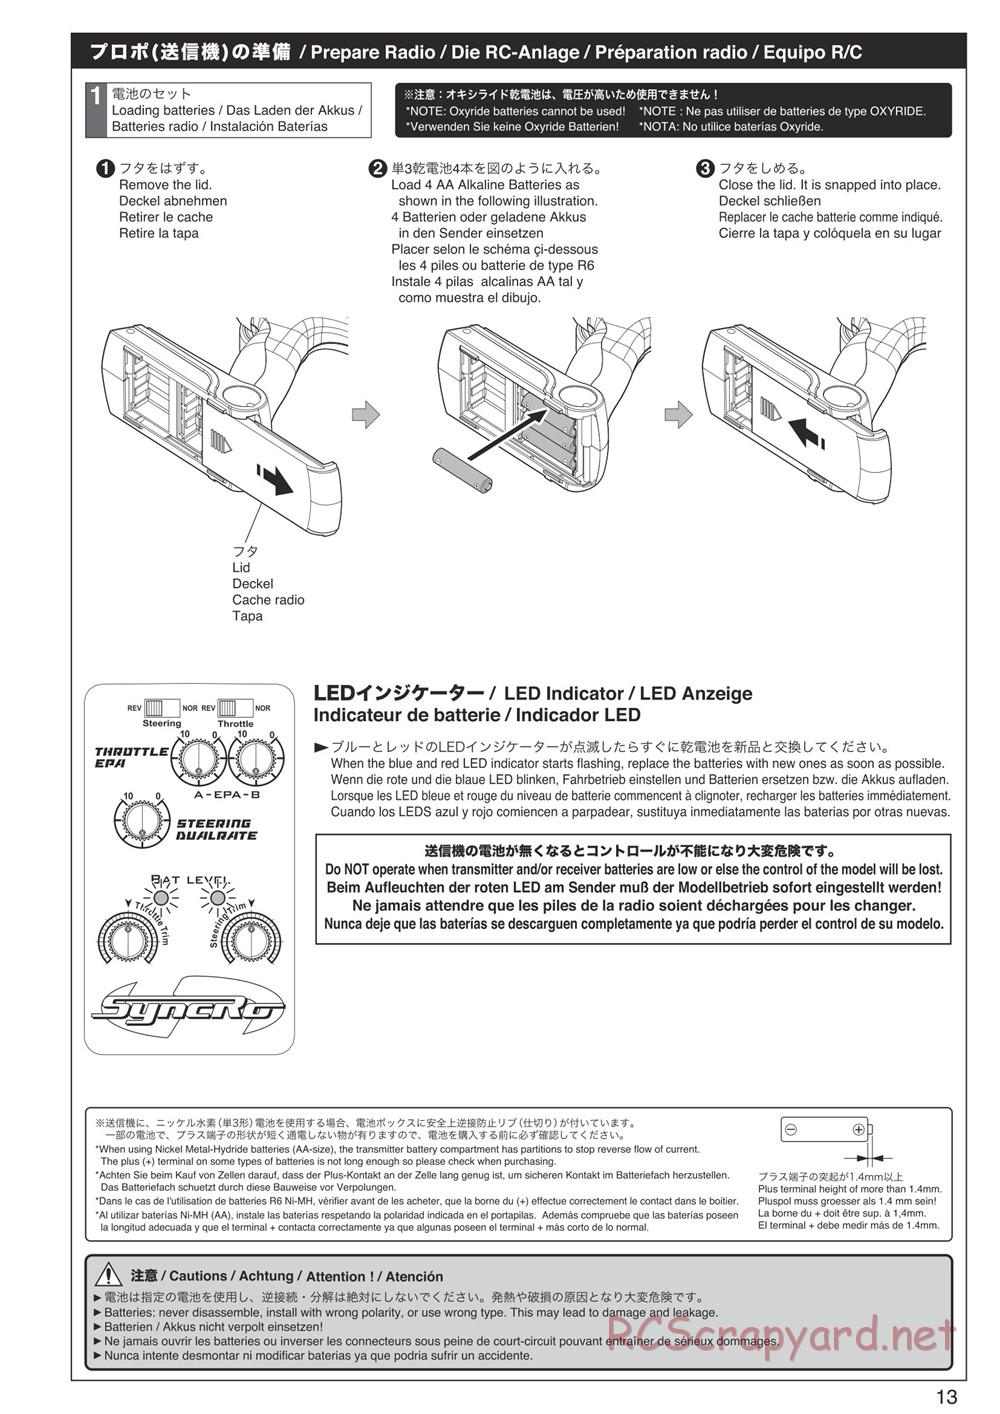 Kyosho - Mad Force Kruiser VE - Manual - Page 13